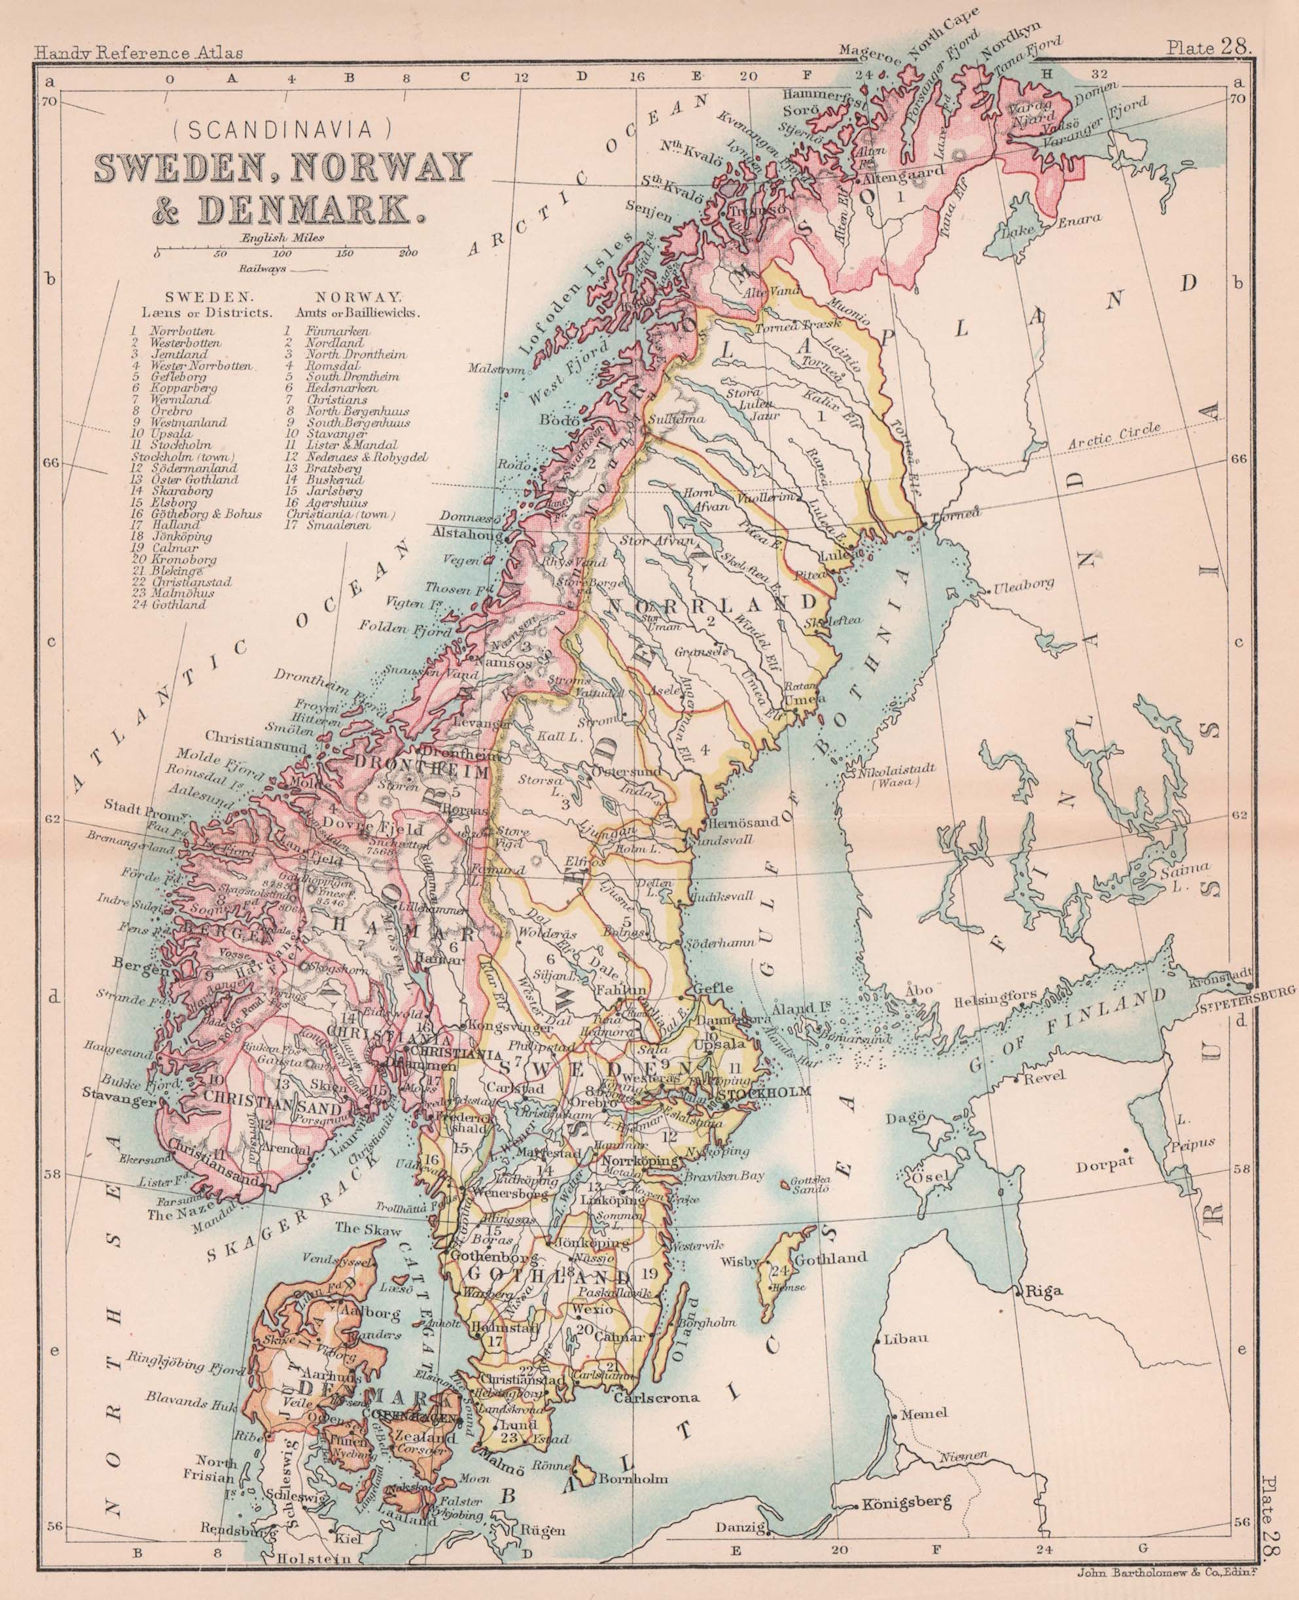 Associate Product Sweden, Norway, & Denmark. Scandinavia. BARTHOLOMEW 1893 old antique map chart